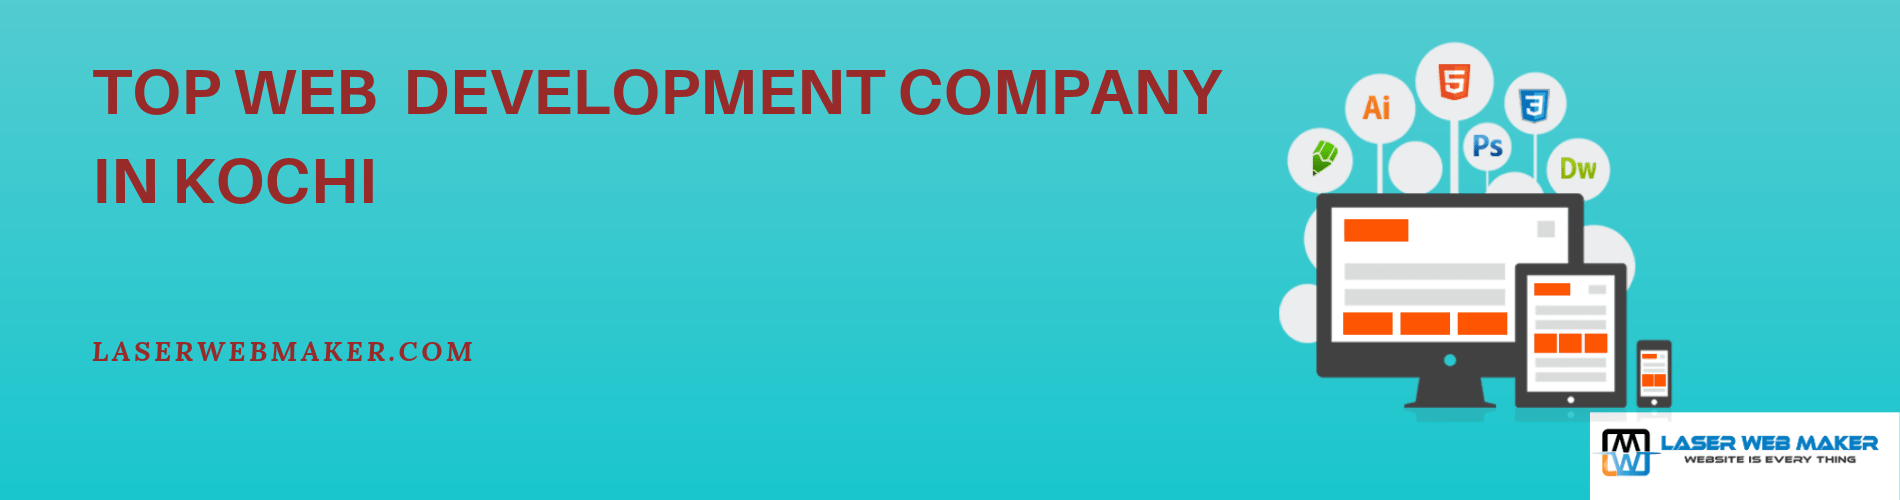 Top Web Development Company In Kochi